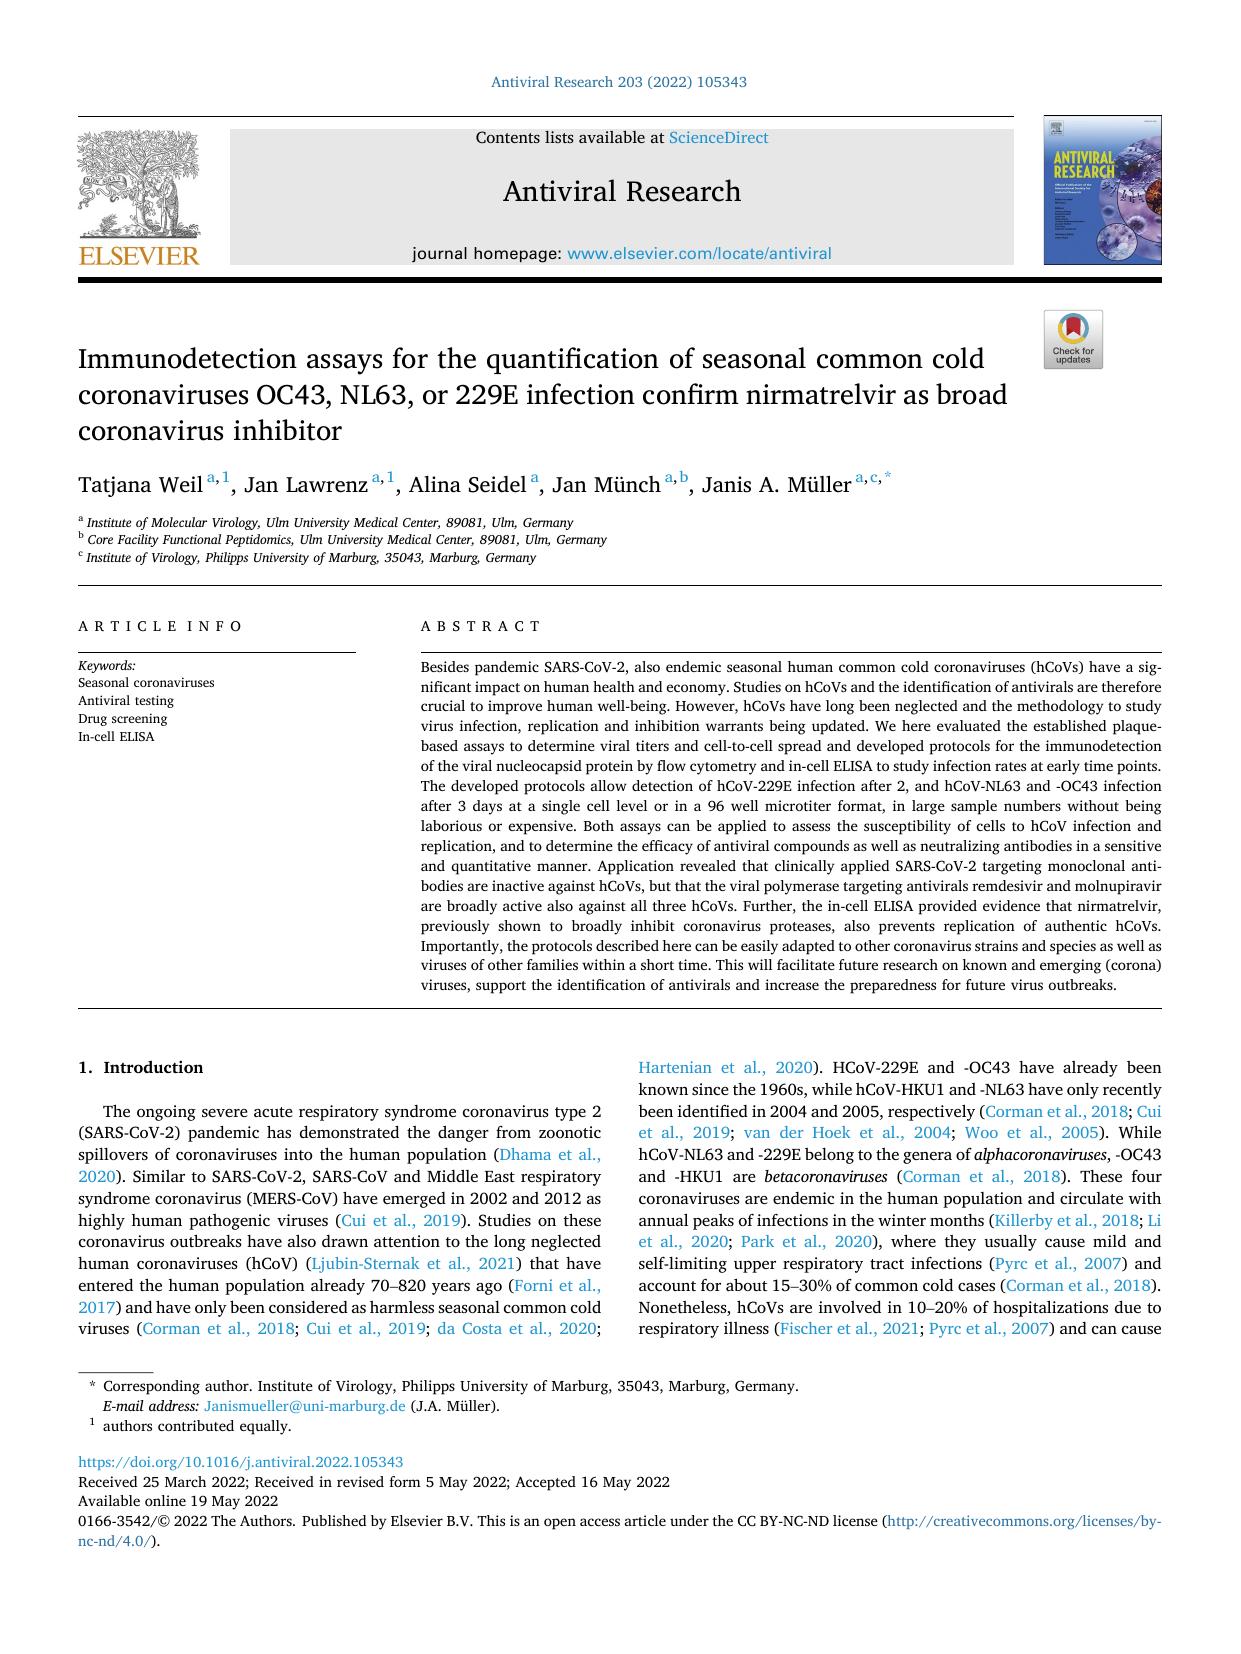 Immunodetection assays for the quantification of seasonal common cold coronaviruses OC43, NL63, or 229E infection confirm nirmatrelvir as broad coronavirus inhibitor by Tatjana Weil & Jan Lawrenz & Alina Seidel & Jan Münch & Janis A. Müller